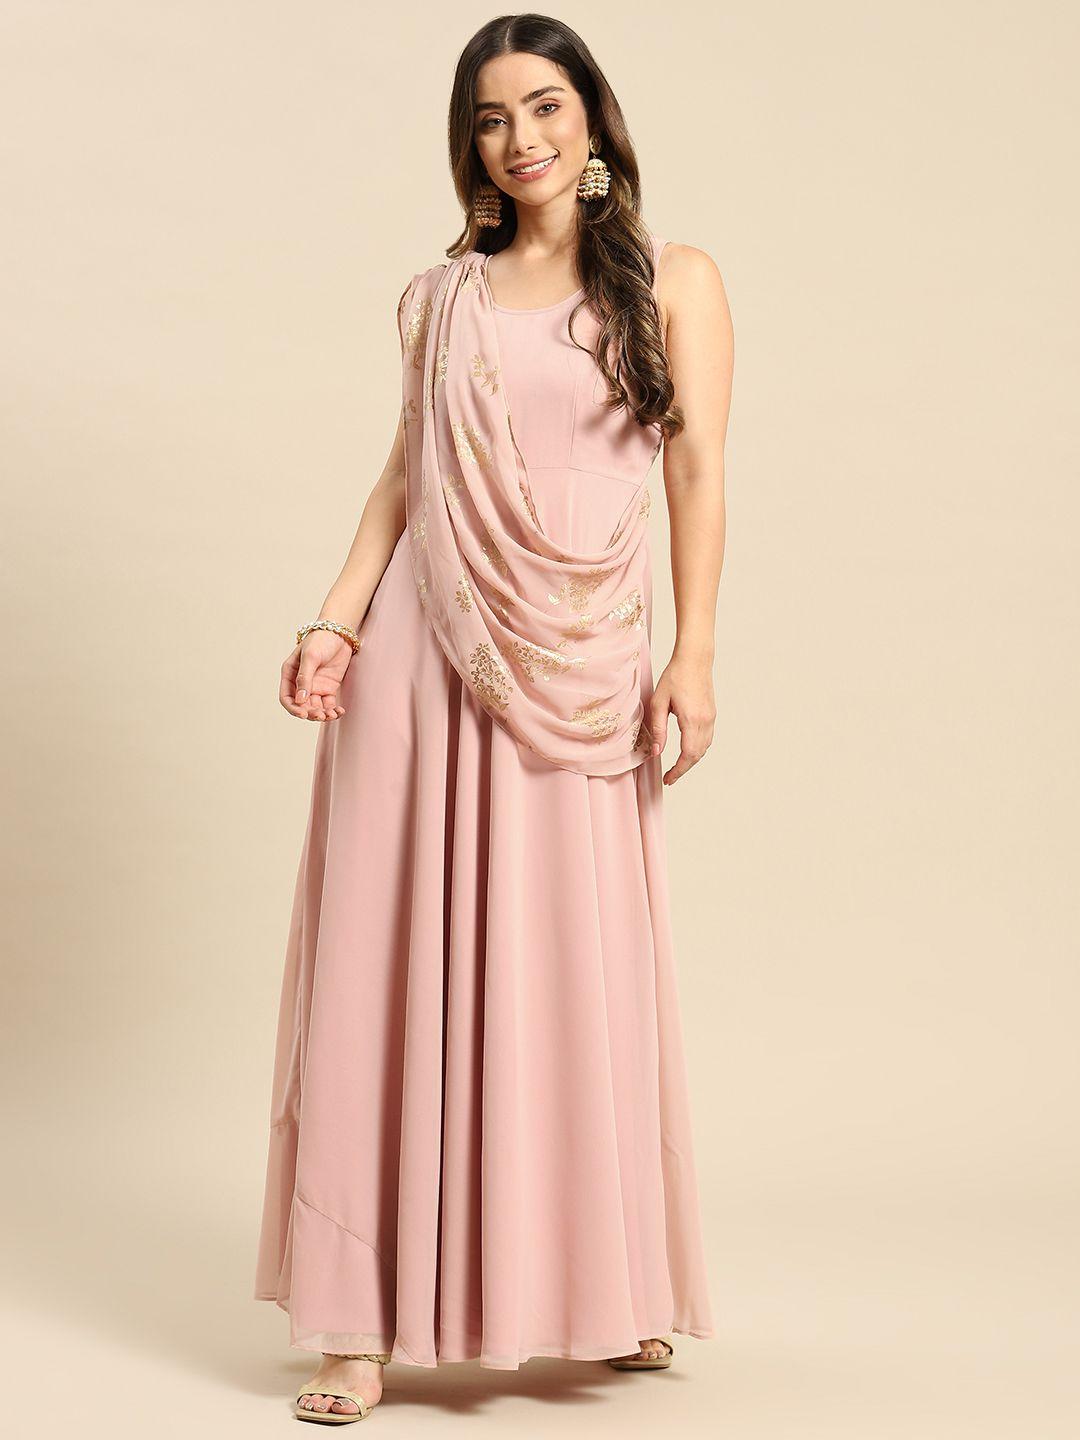 mabish by sonal jain pink layered georgette maxi dress with dupatta drape